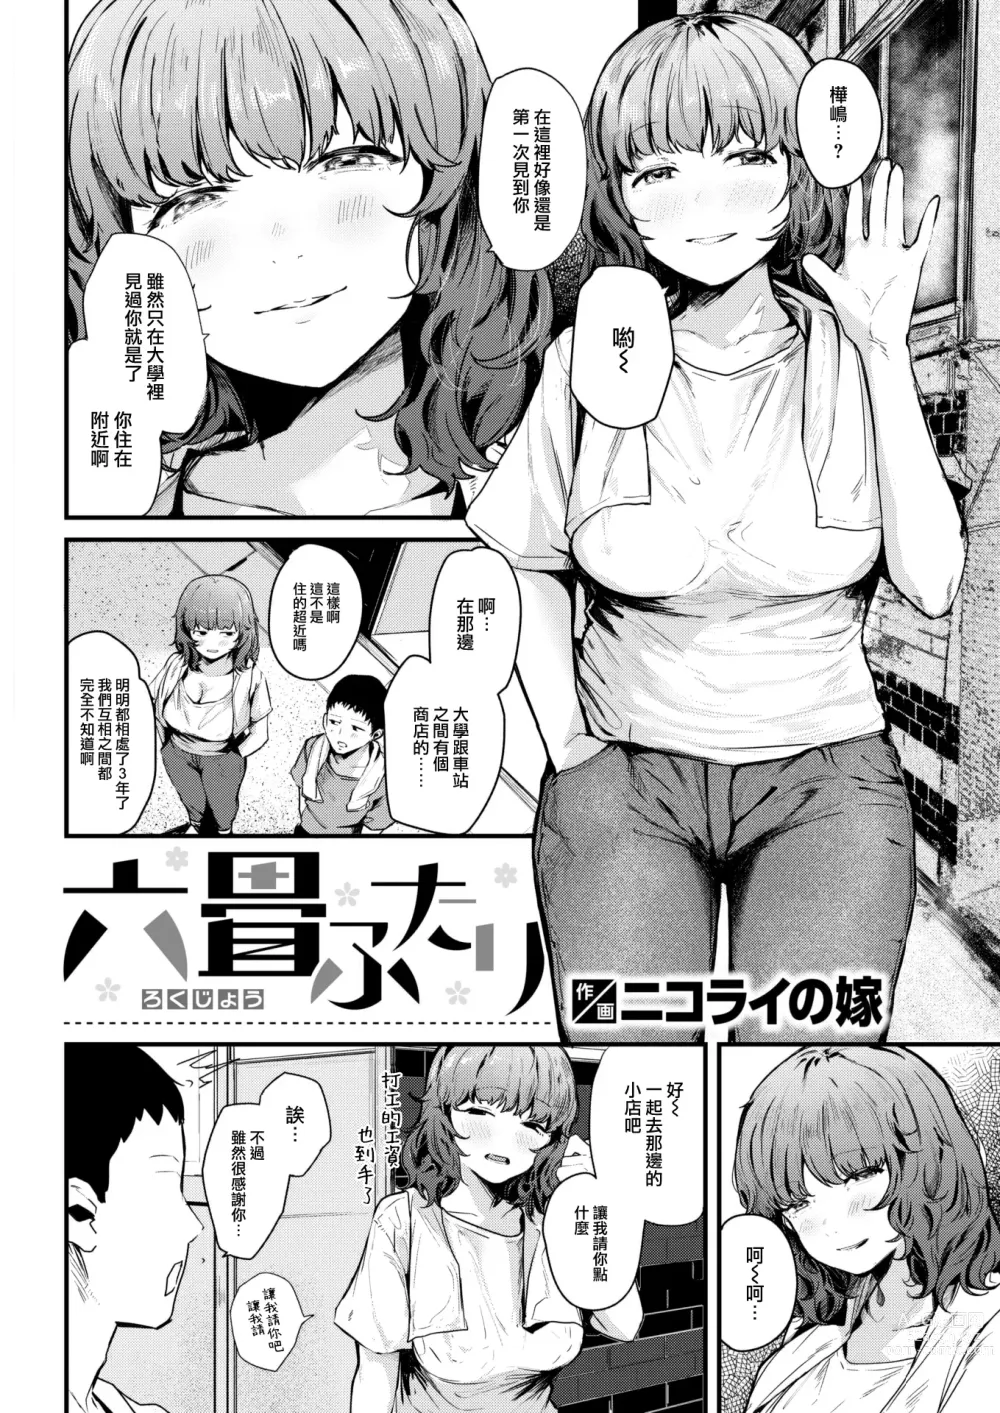 Page 3 of manga Rokujou Futari